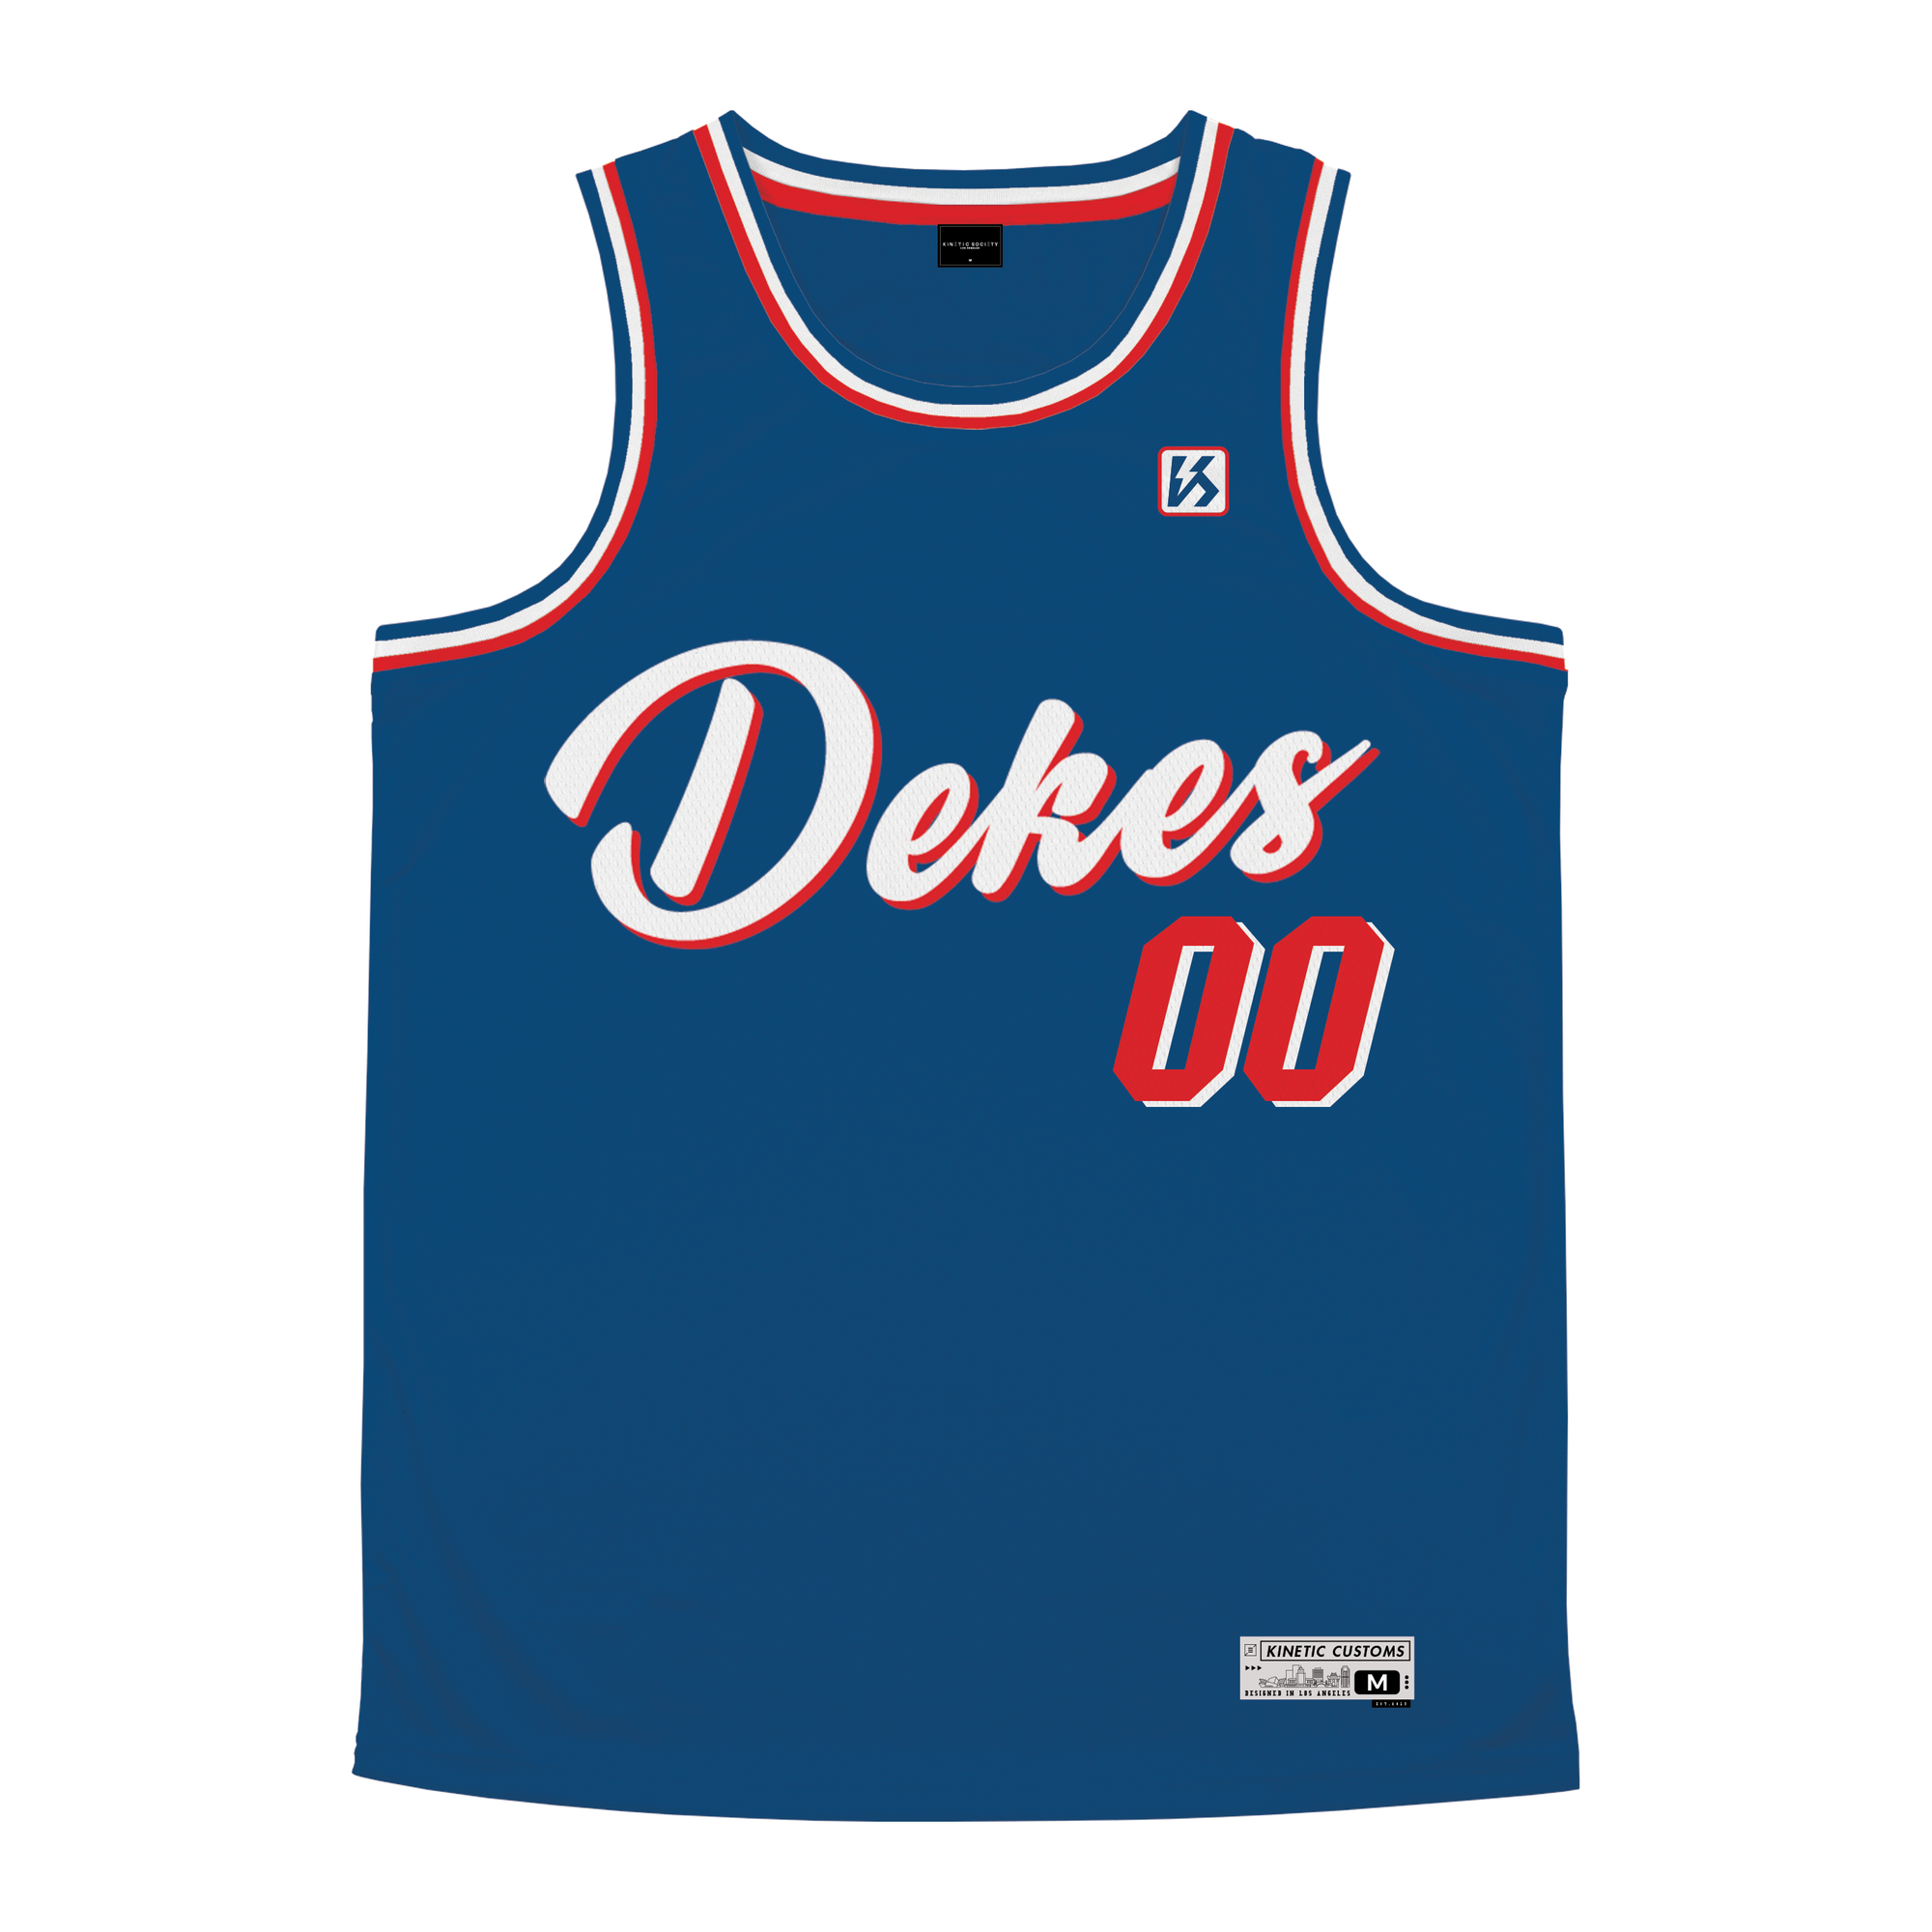 Delta Kappa Epsilon - The Dream Basketball Jersey